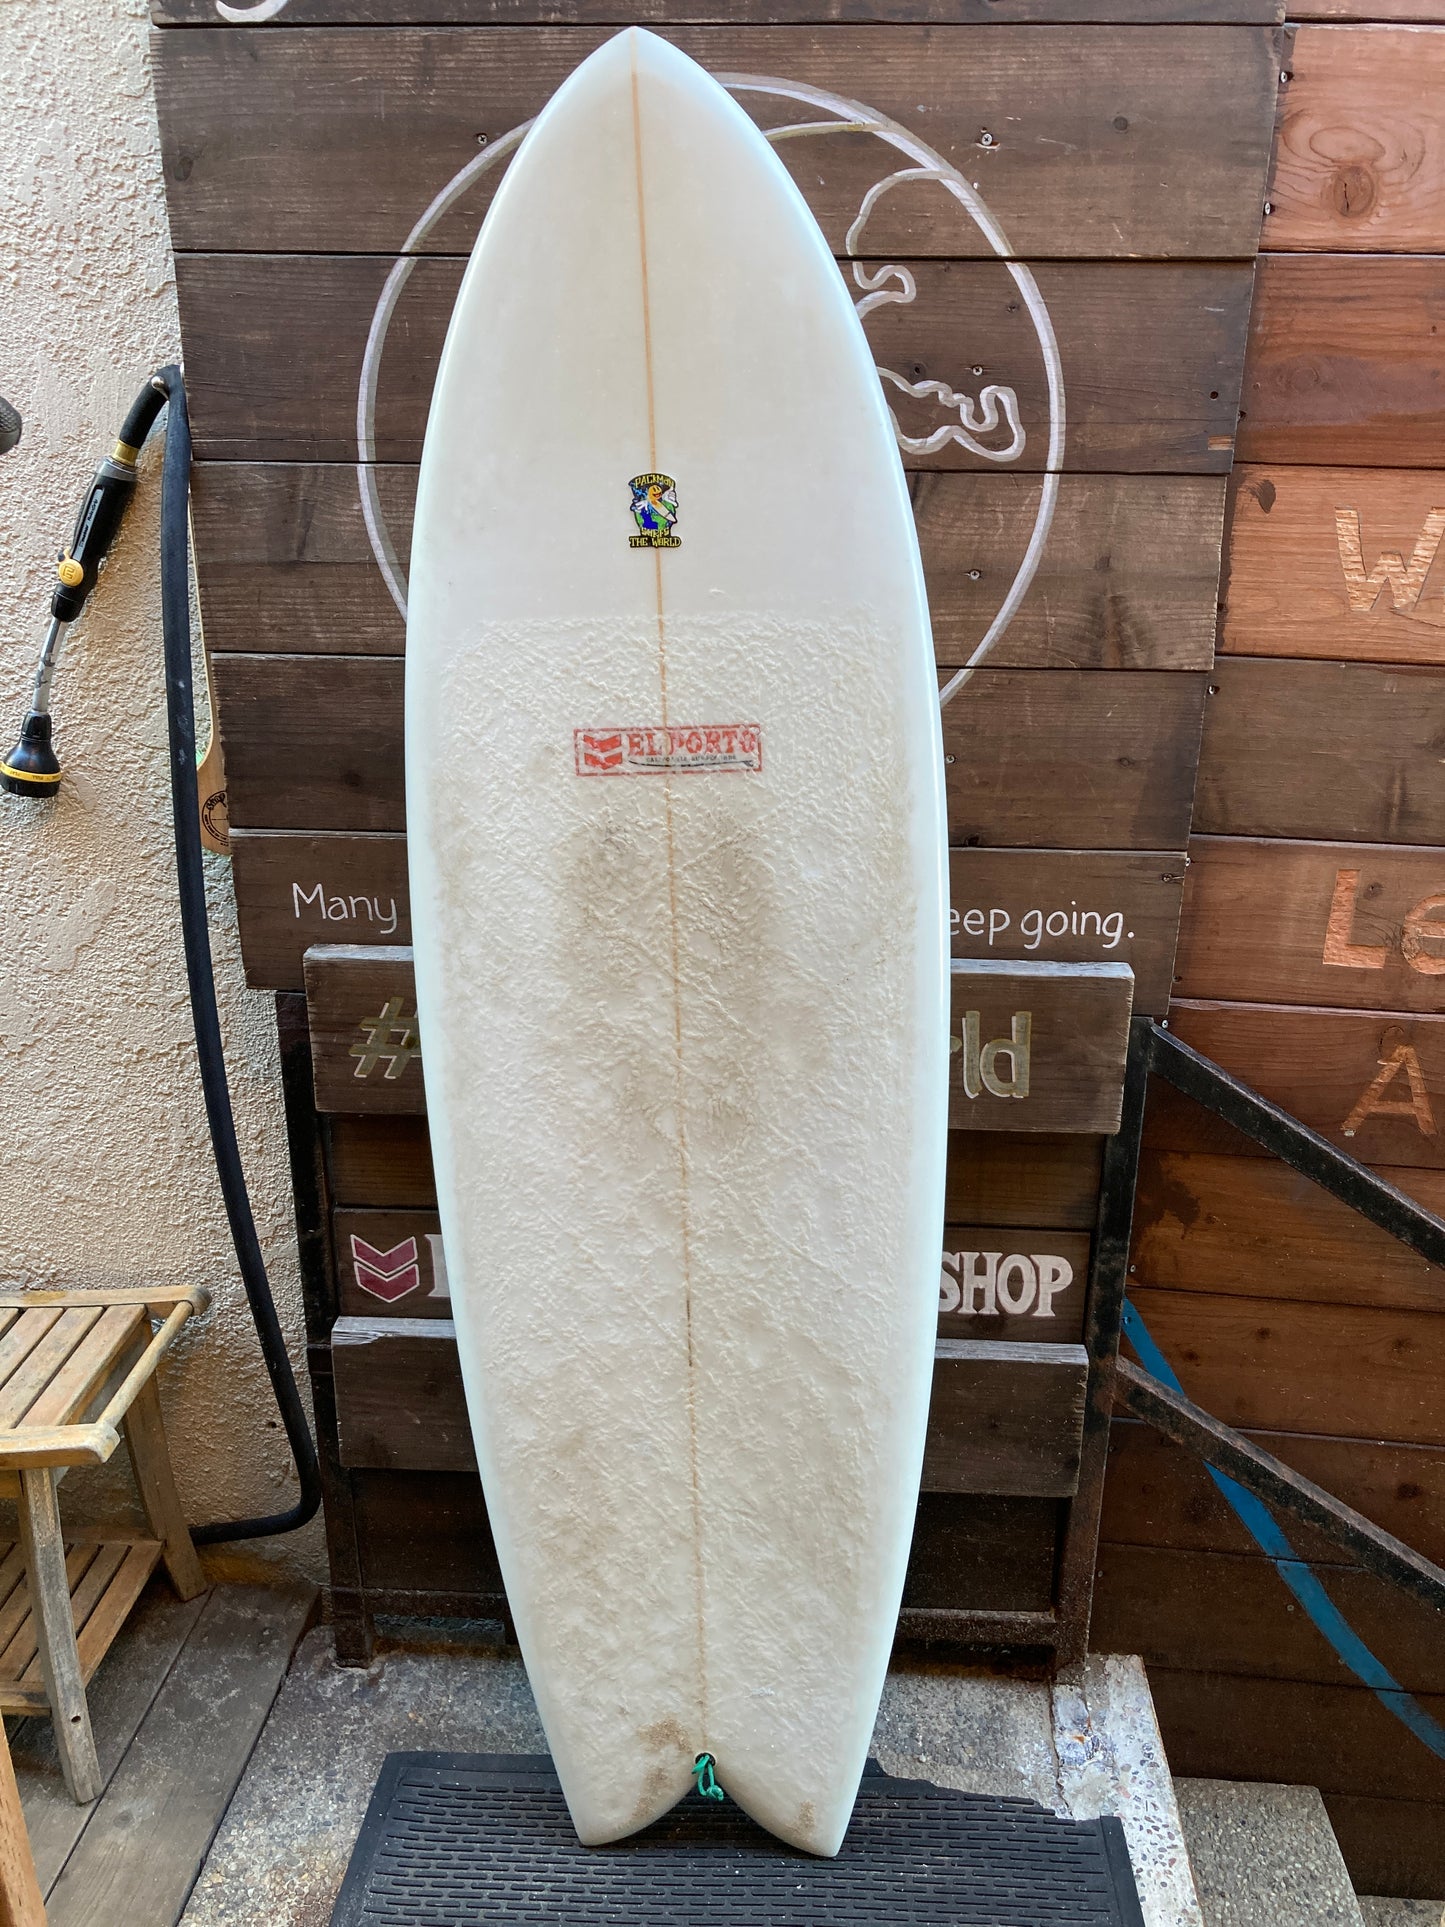 USED: El Porto x Barahona 5'8 Twin Fish Surfboard